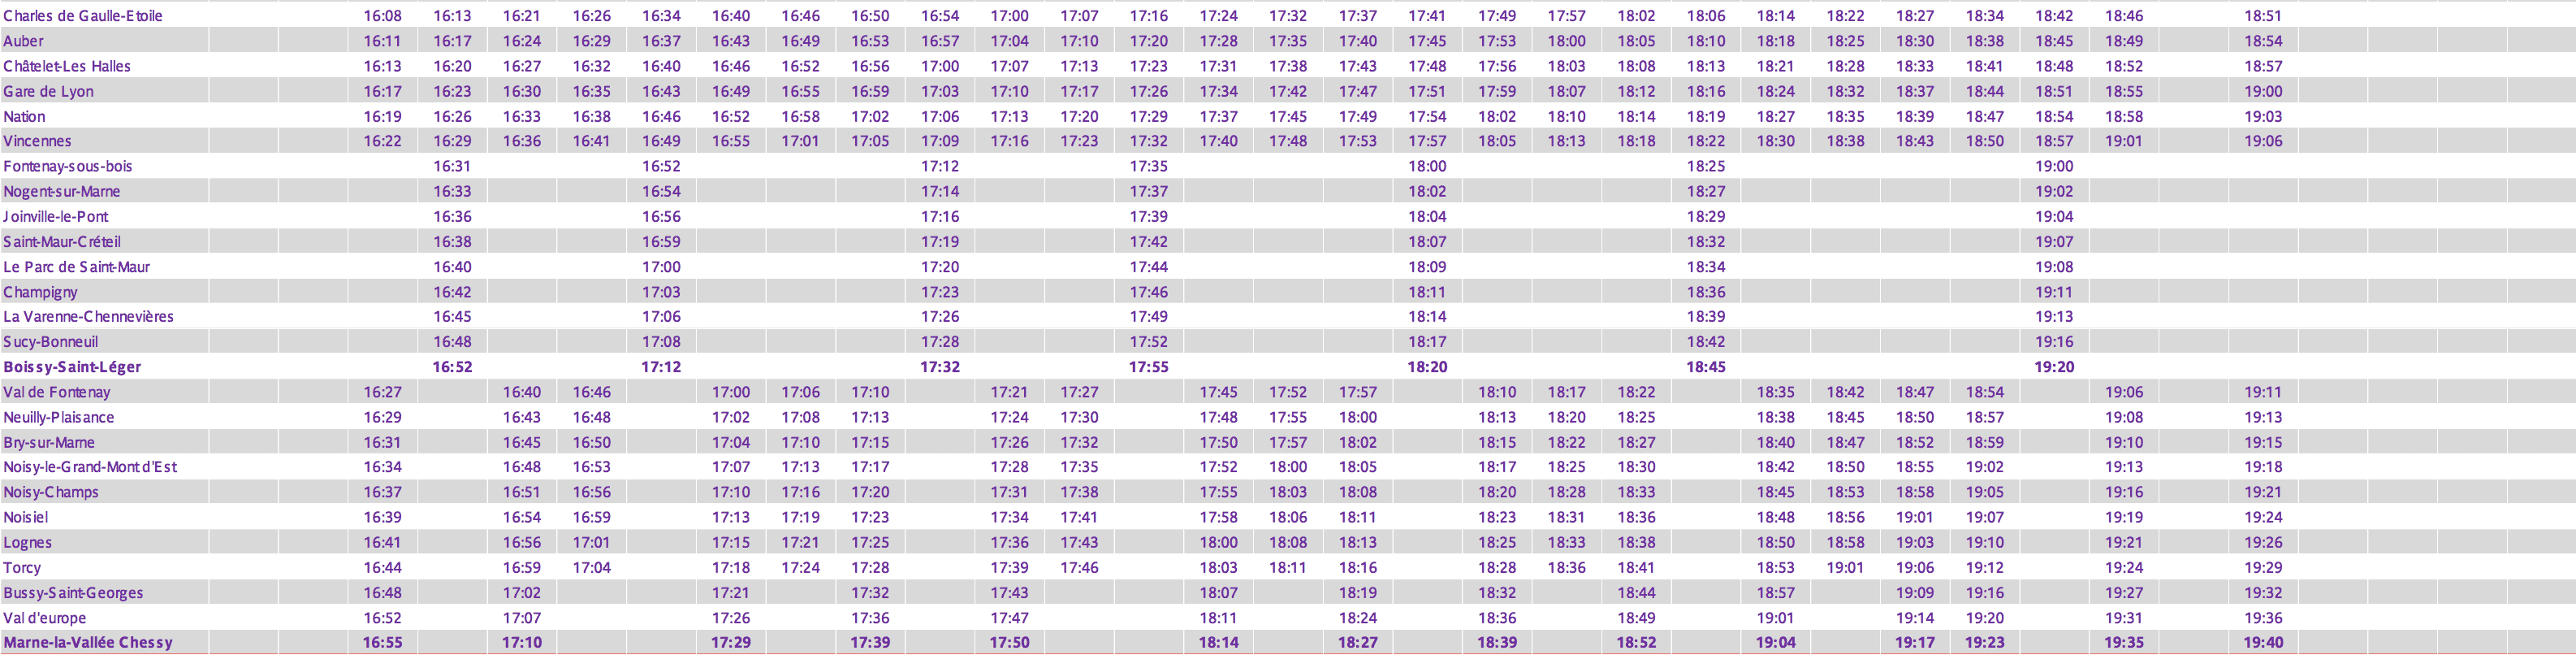 RER A afternoon timetable Paris to Disneyland half service Dec 2019 train strike